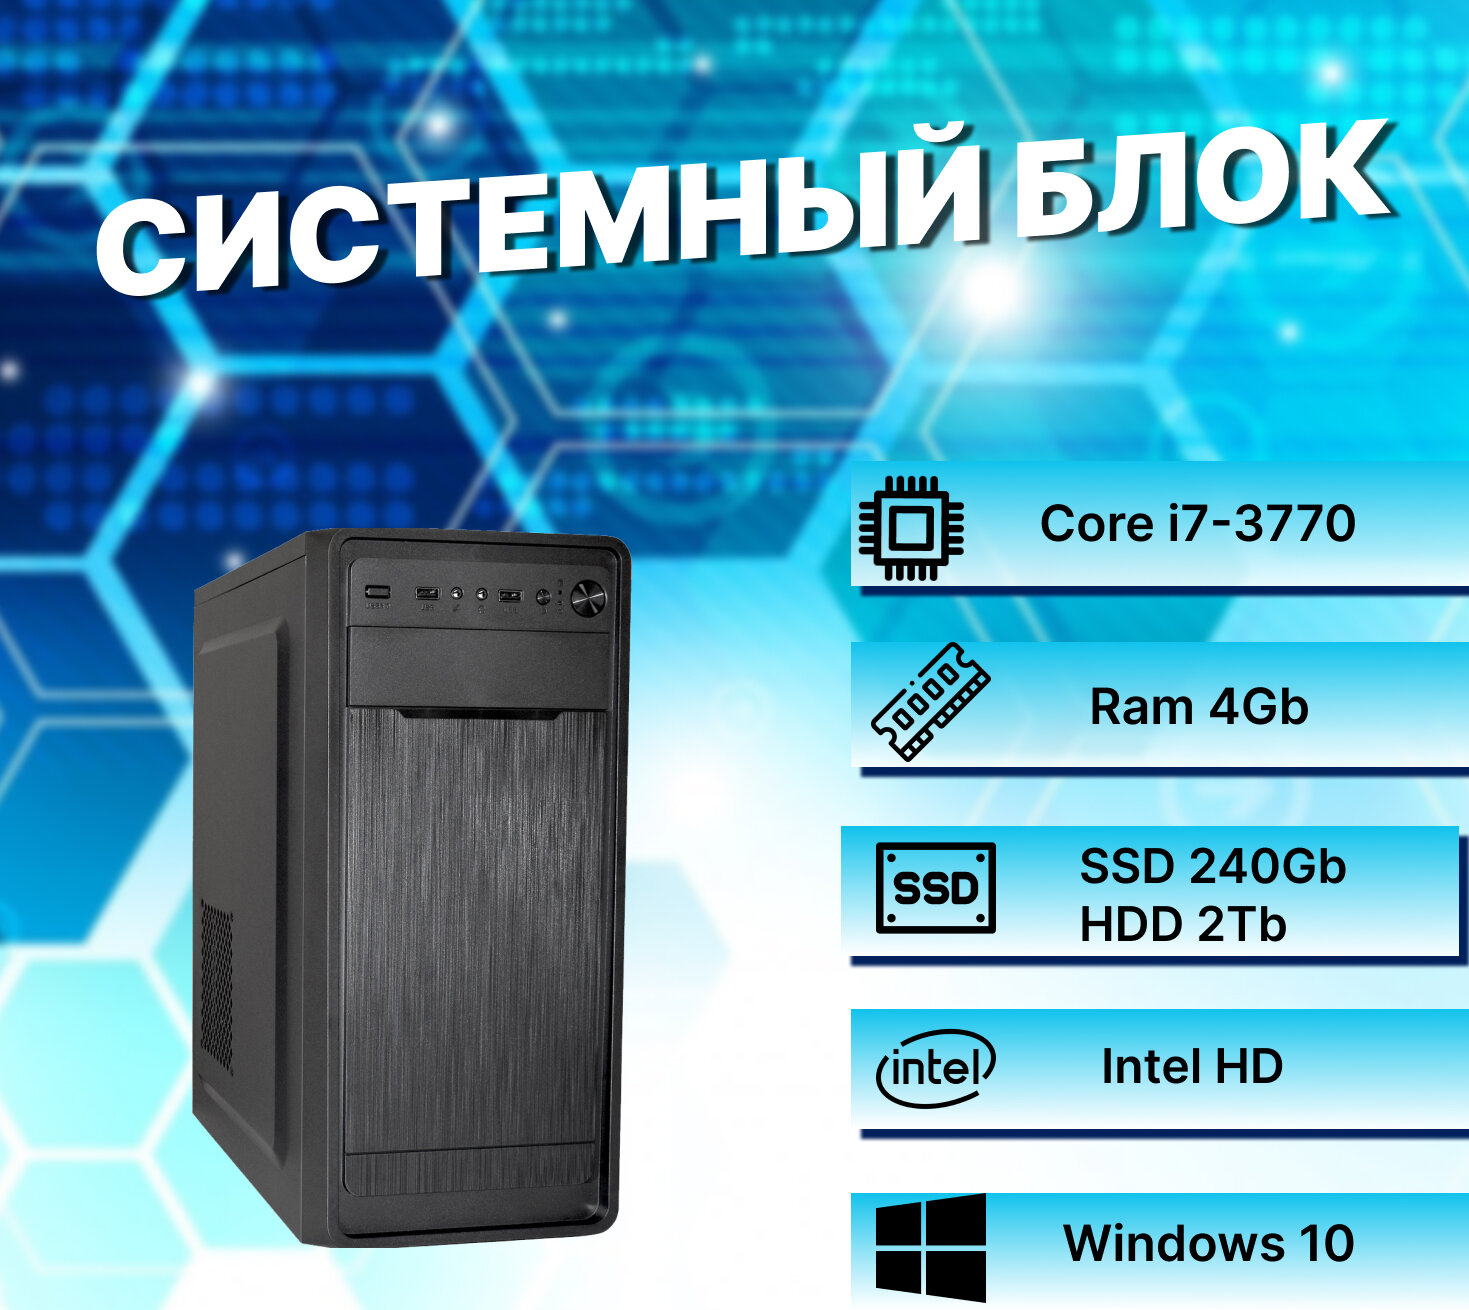 Системный блок Intel Core I7-3770 (3.4ГГц)/ RAM 4Gb/ SSD 240Gb/ HDD 2Tb/ Intel HD/ Windows 10 Pro